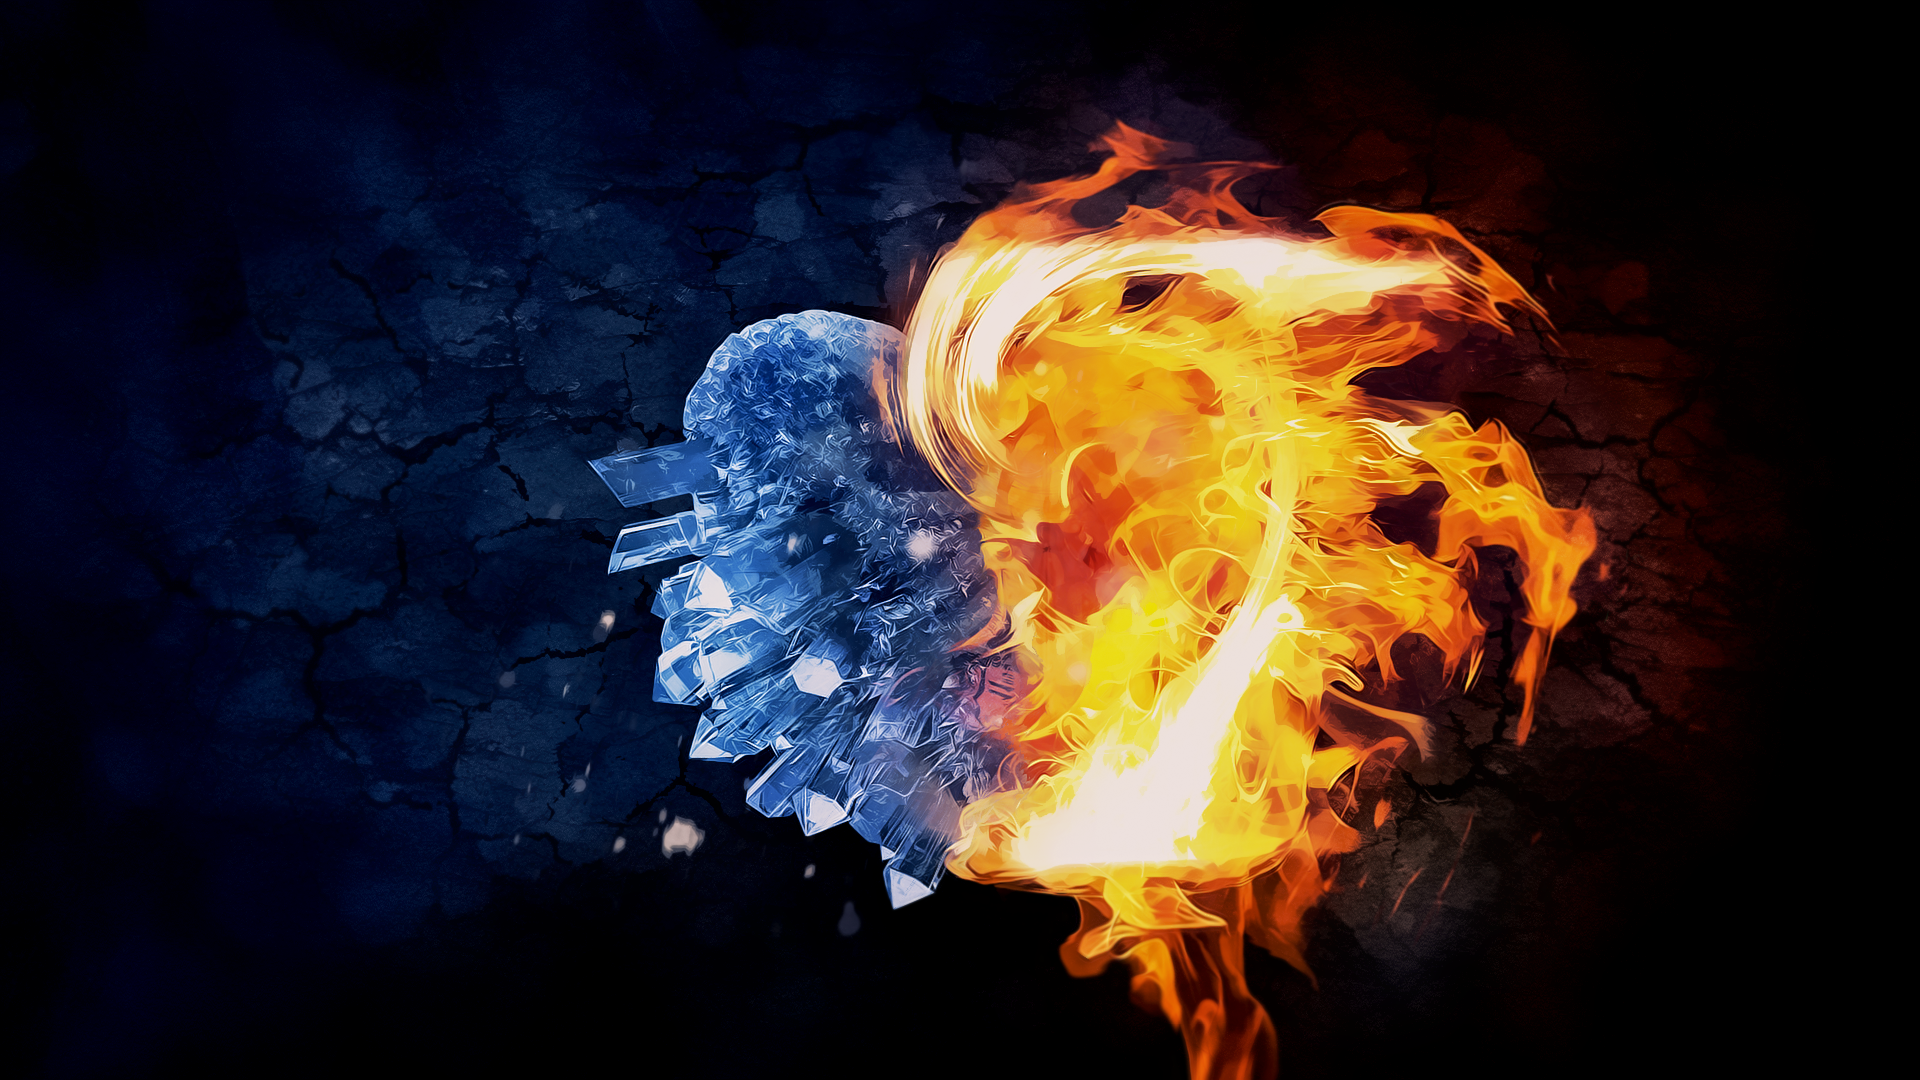 CG Digital Art Digital Abstract 3D Abstract Love Heart Fire Ice Romance 1920x1080